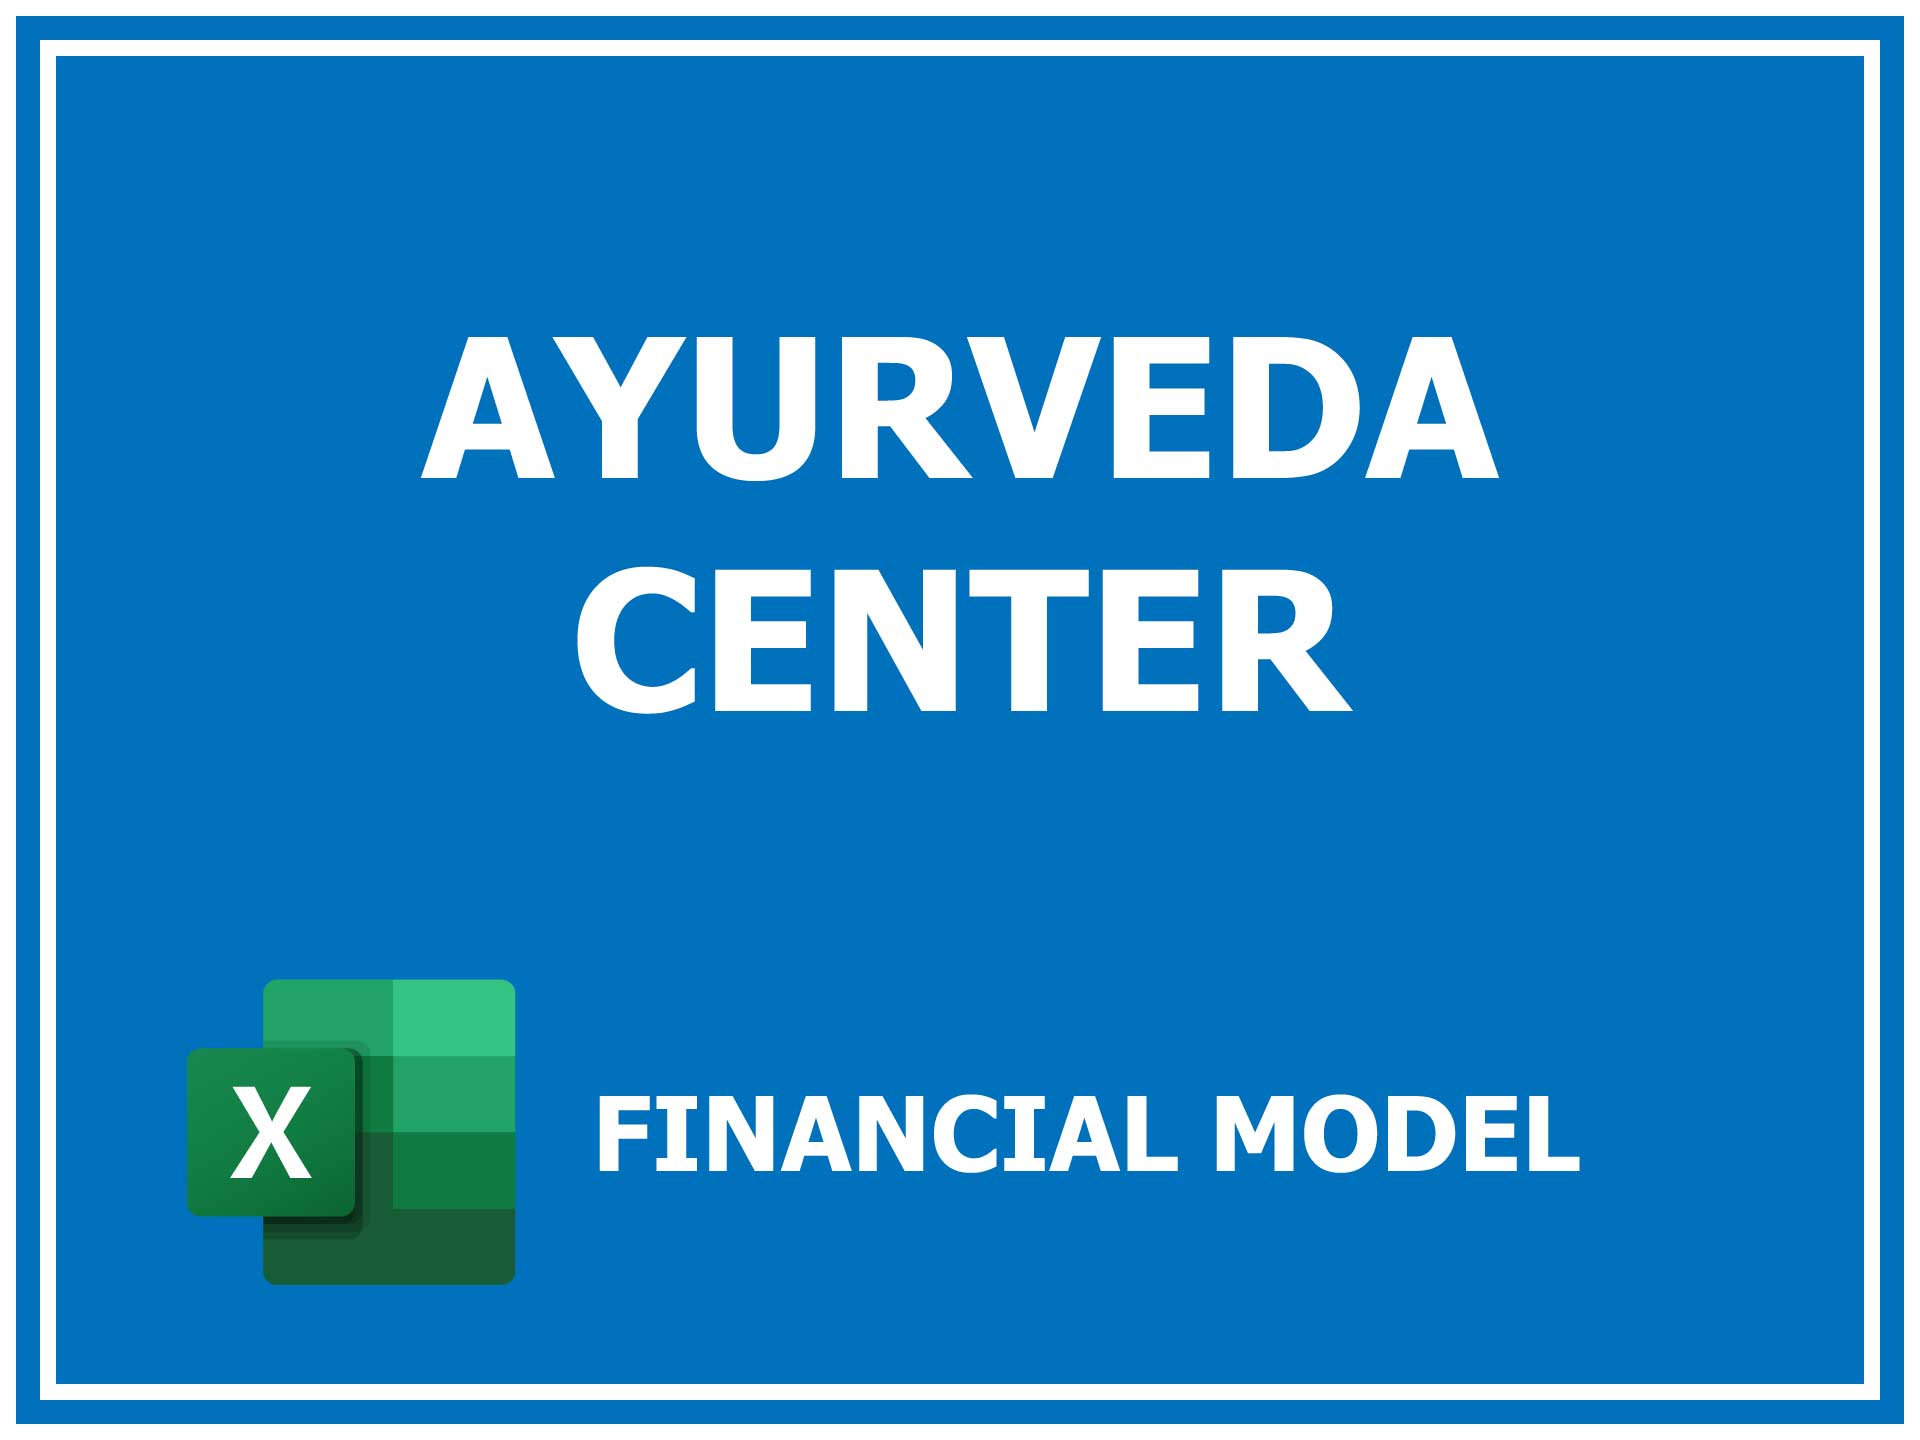 Ayurveda Center